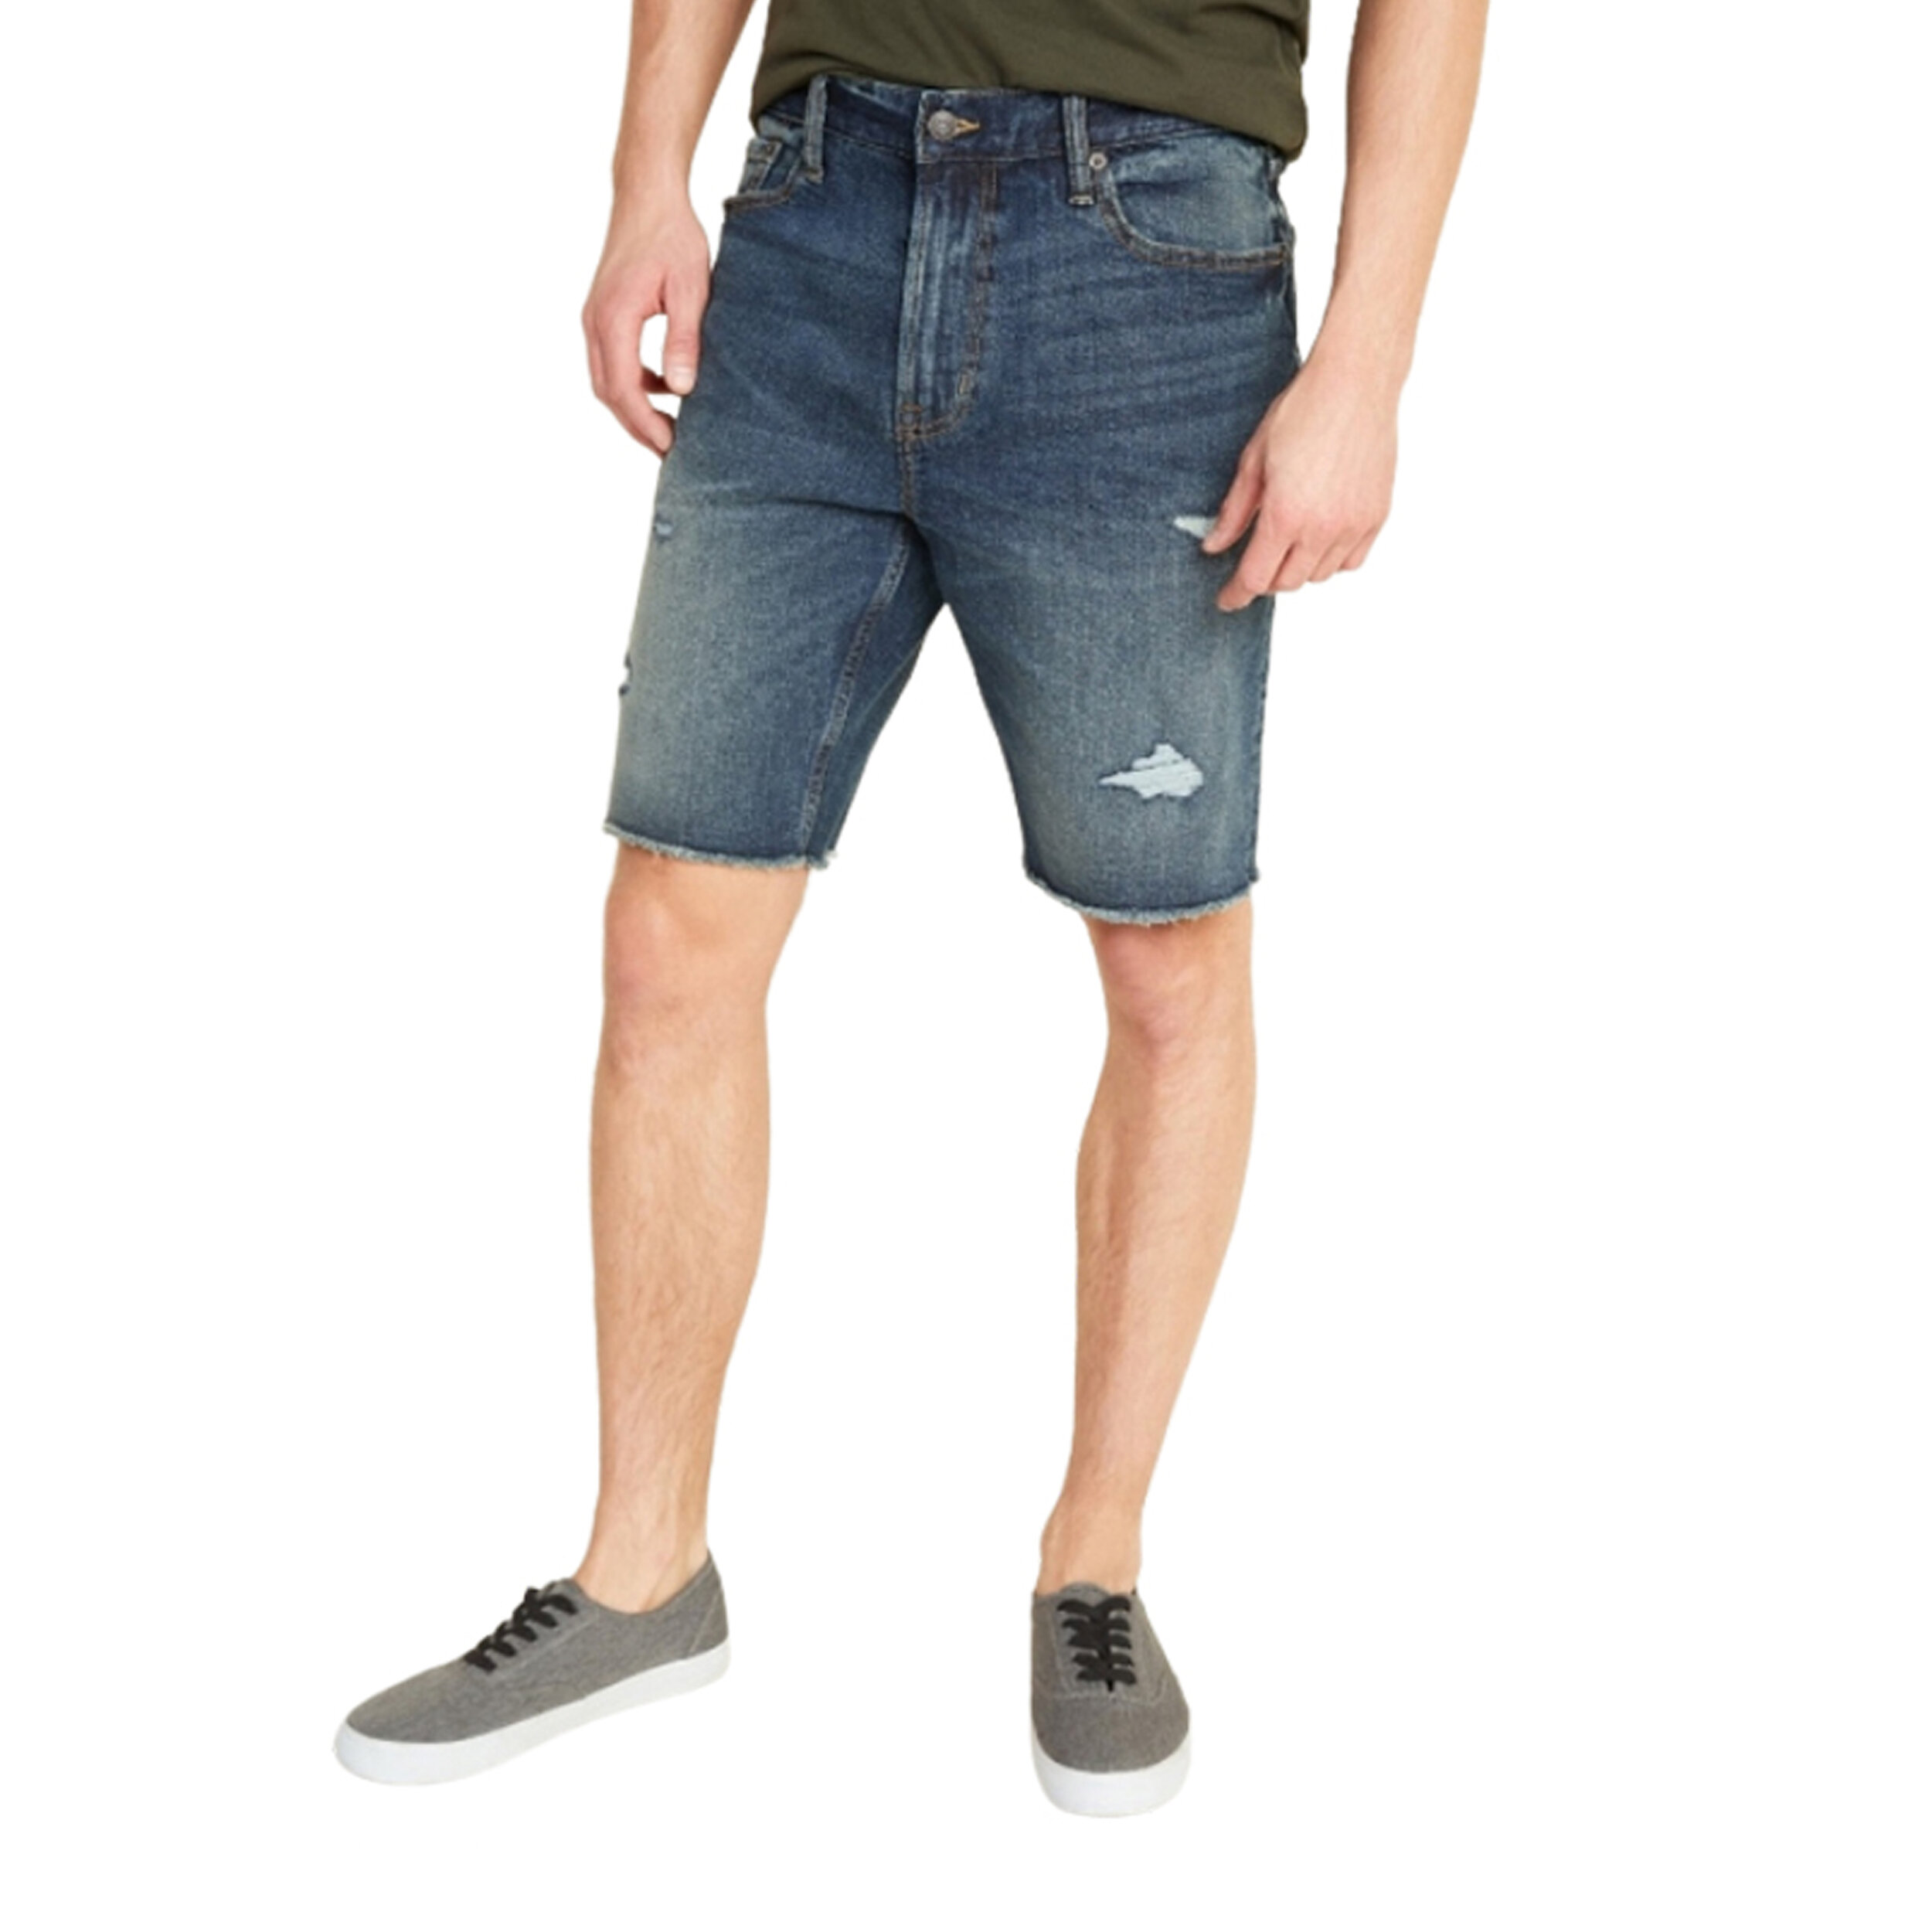  Slim Built-In Flex Distressed Cut-Off Jean Shorts for Men, Old Navy P2,250 